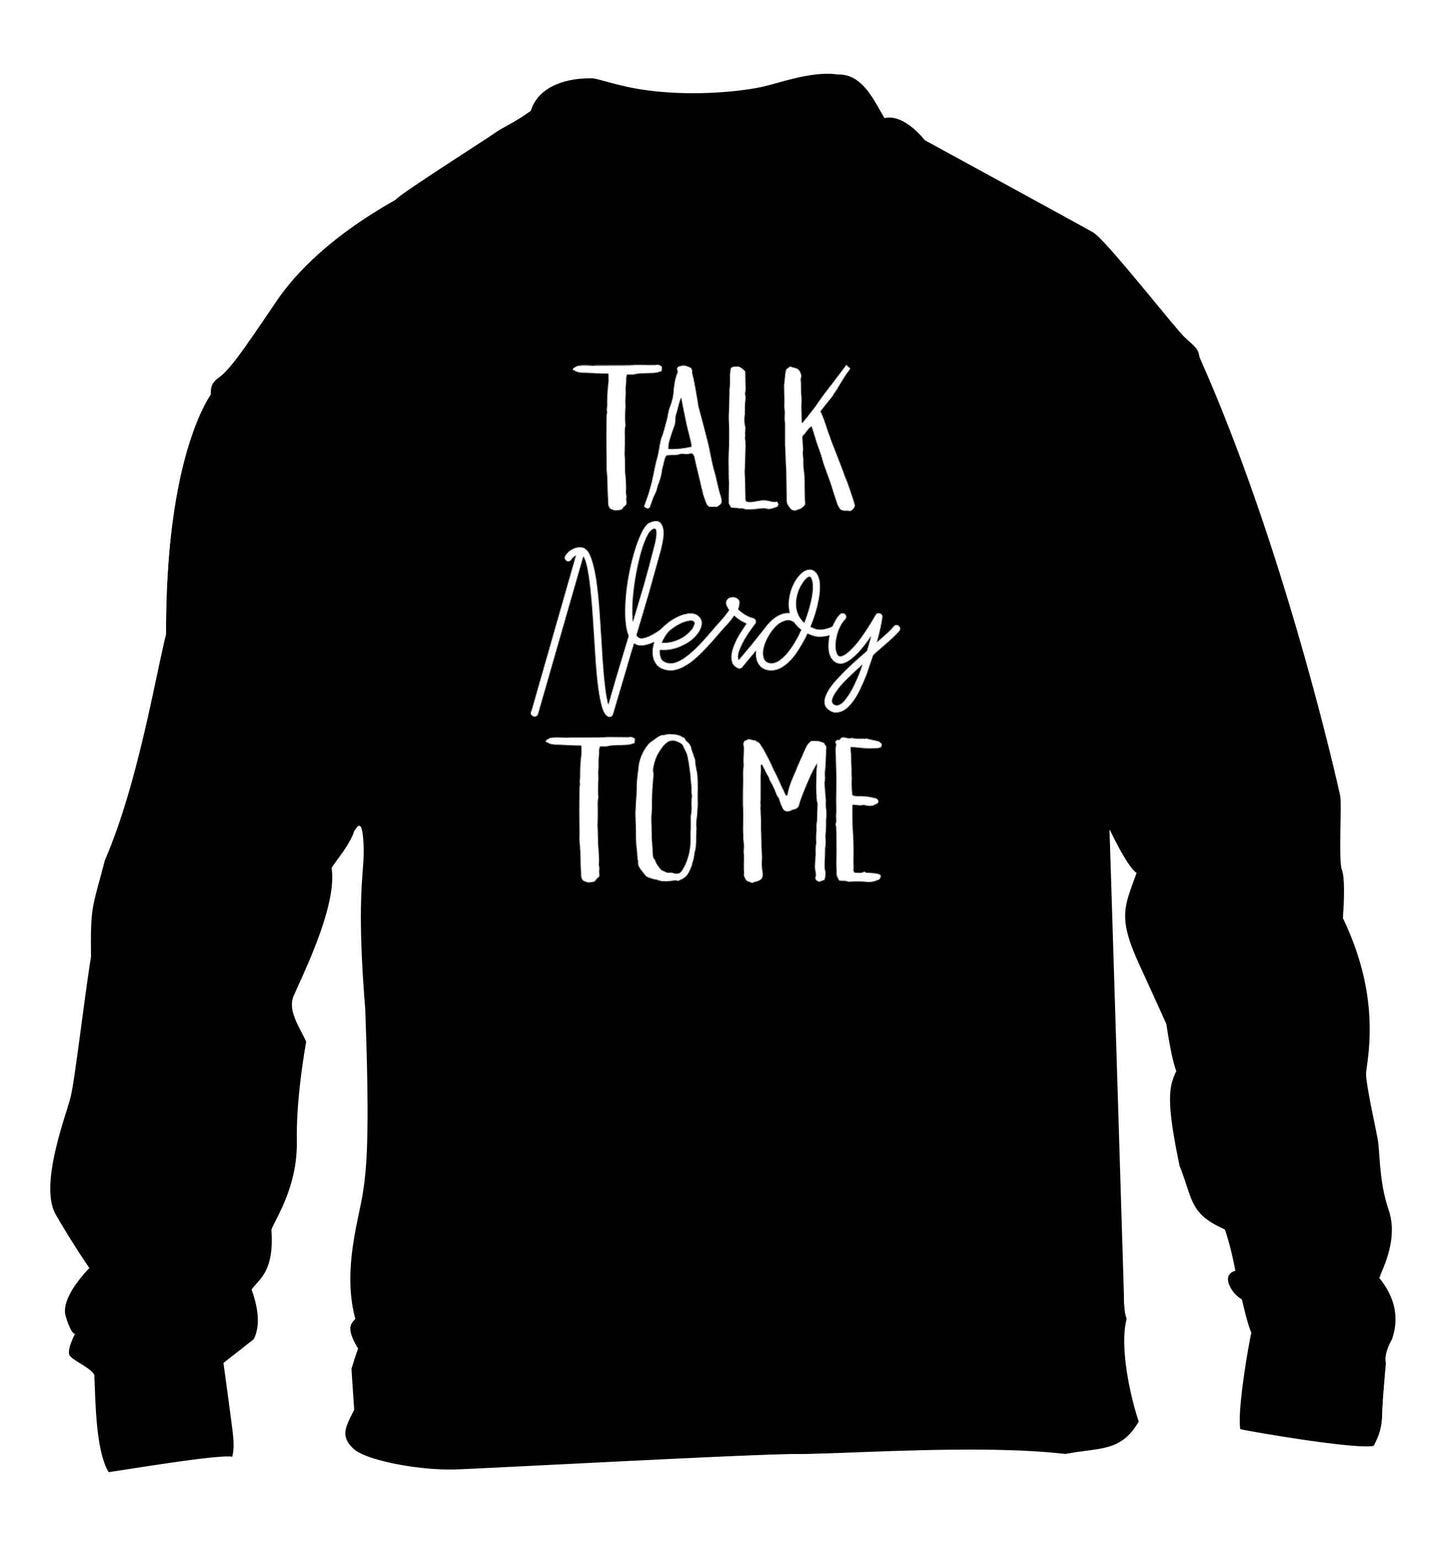 Talk nerdy to me children's black sweater 12-13 Years